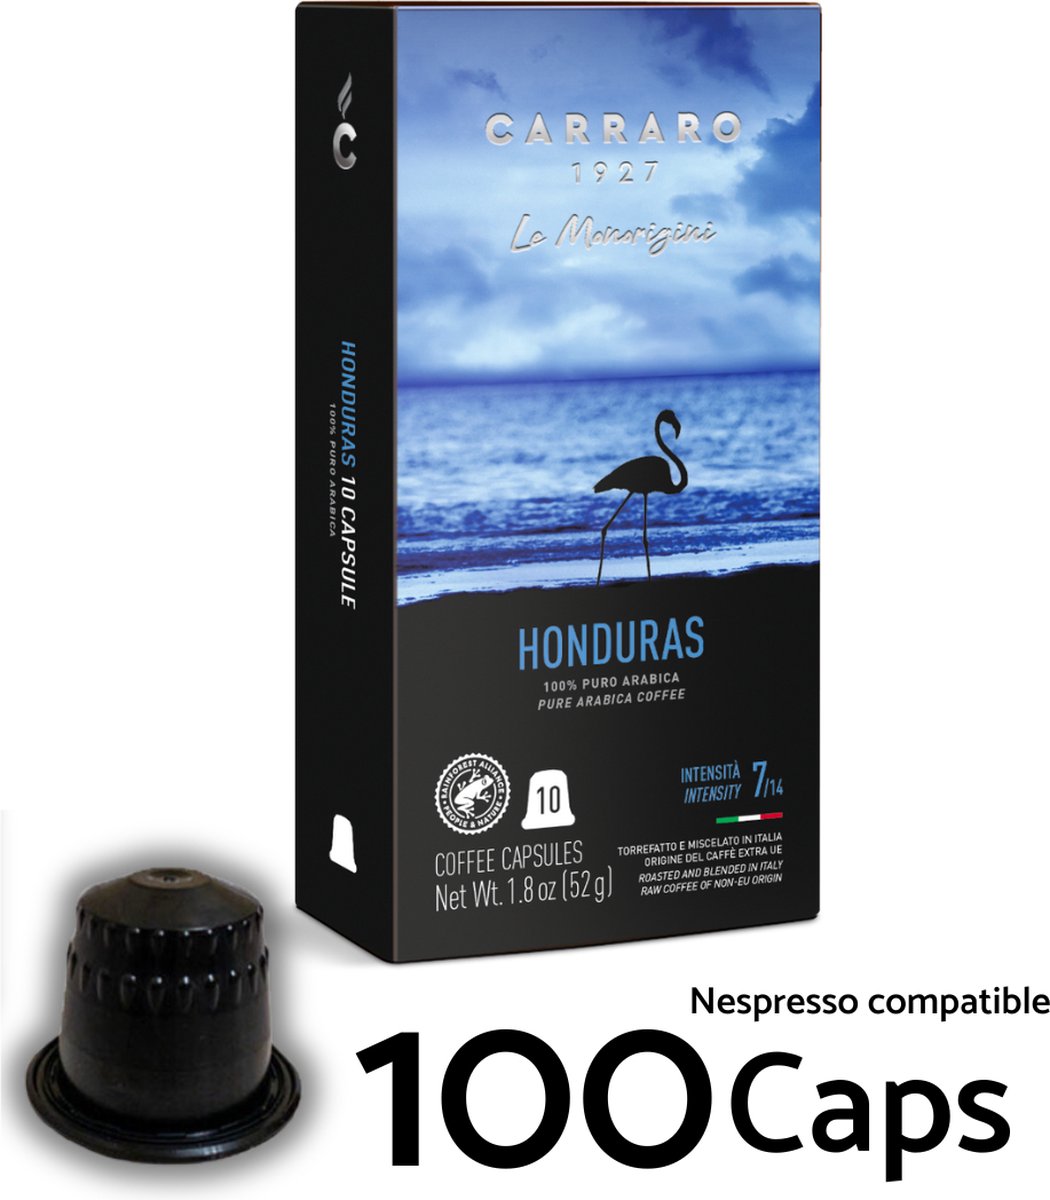 Nespresso® Compatibel cups - Caffe Carraro 1927 - Honduras Single Origin Koffie capsules - 100 Koffiecups - Italiaanse Espresso - Intensiteit 7/14 - Geraffineerde koffie, hooge kwaliteit